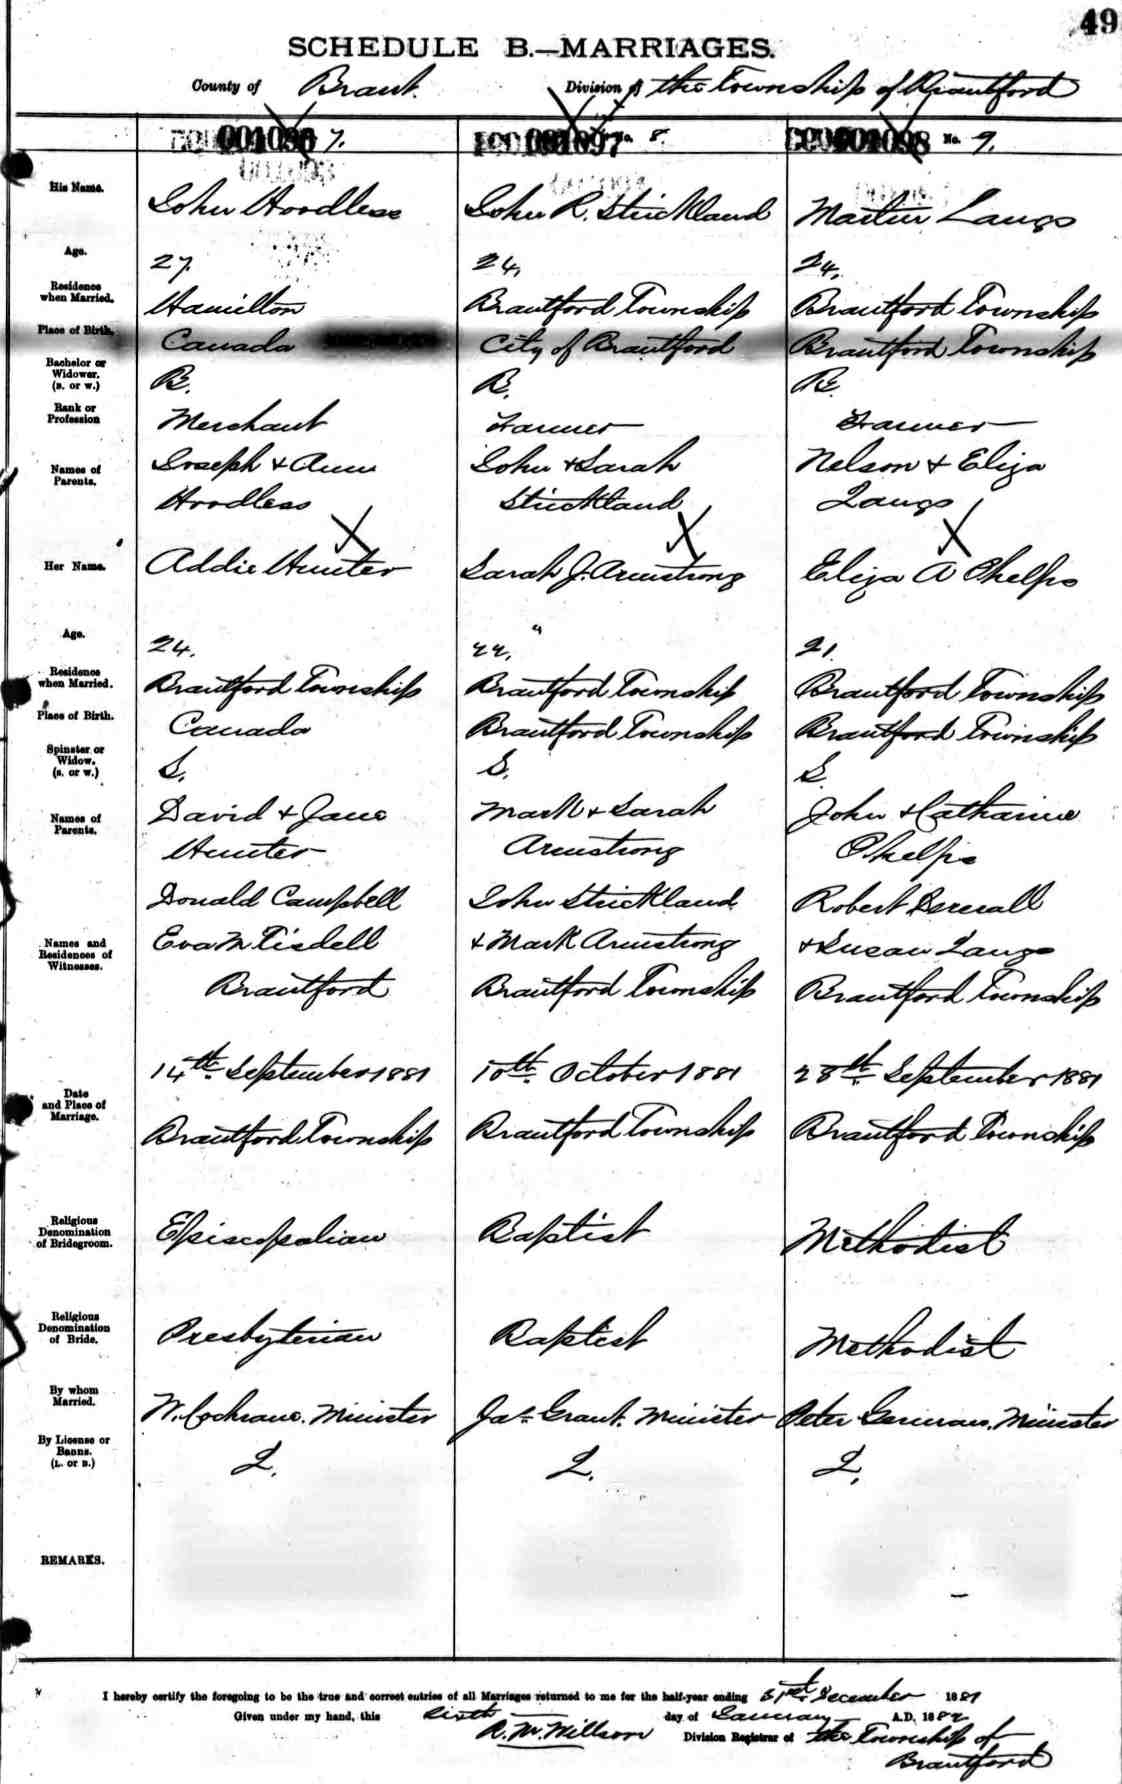 marriage record - john strickland + sarah armstrong 1881.jpg